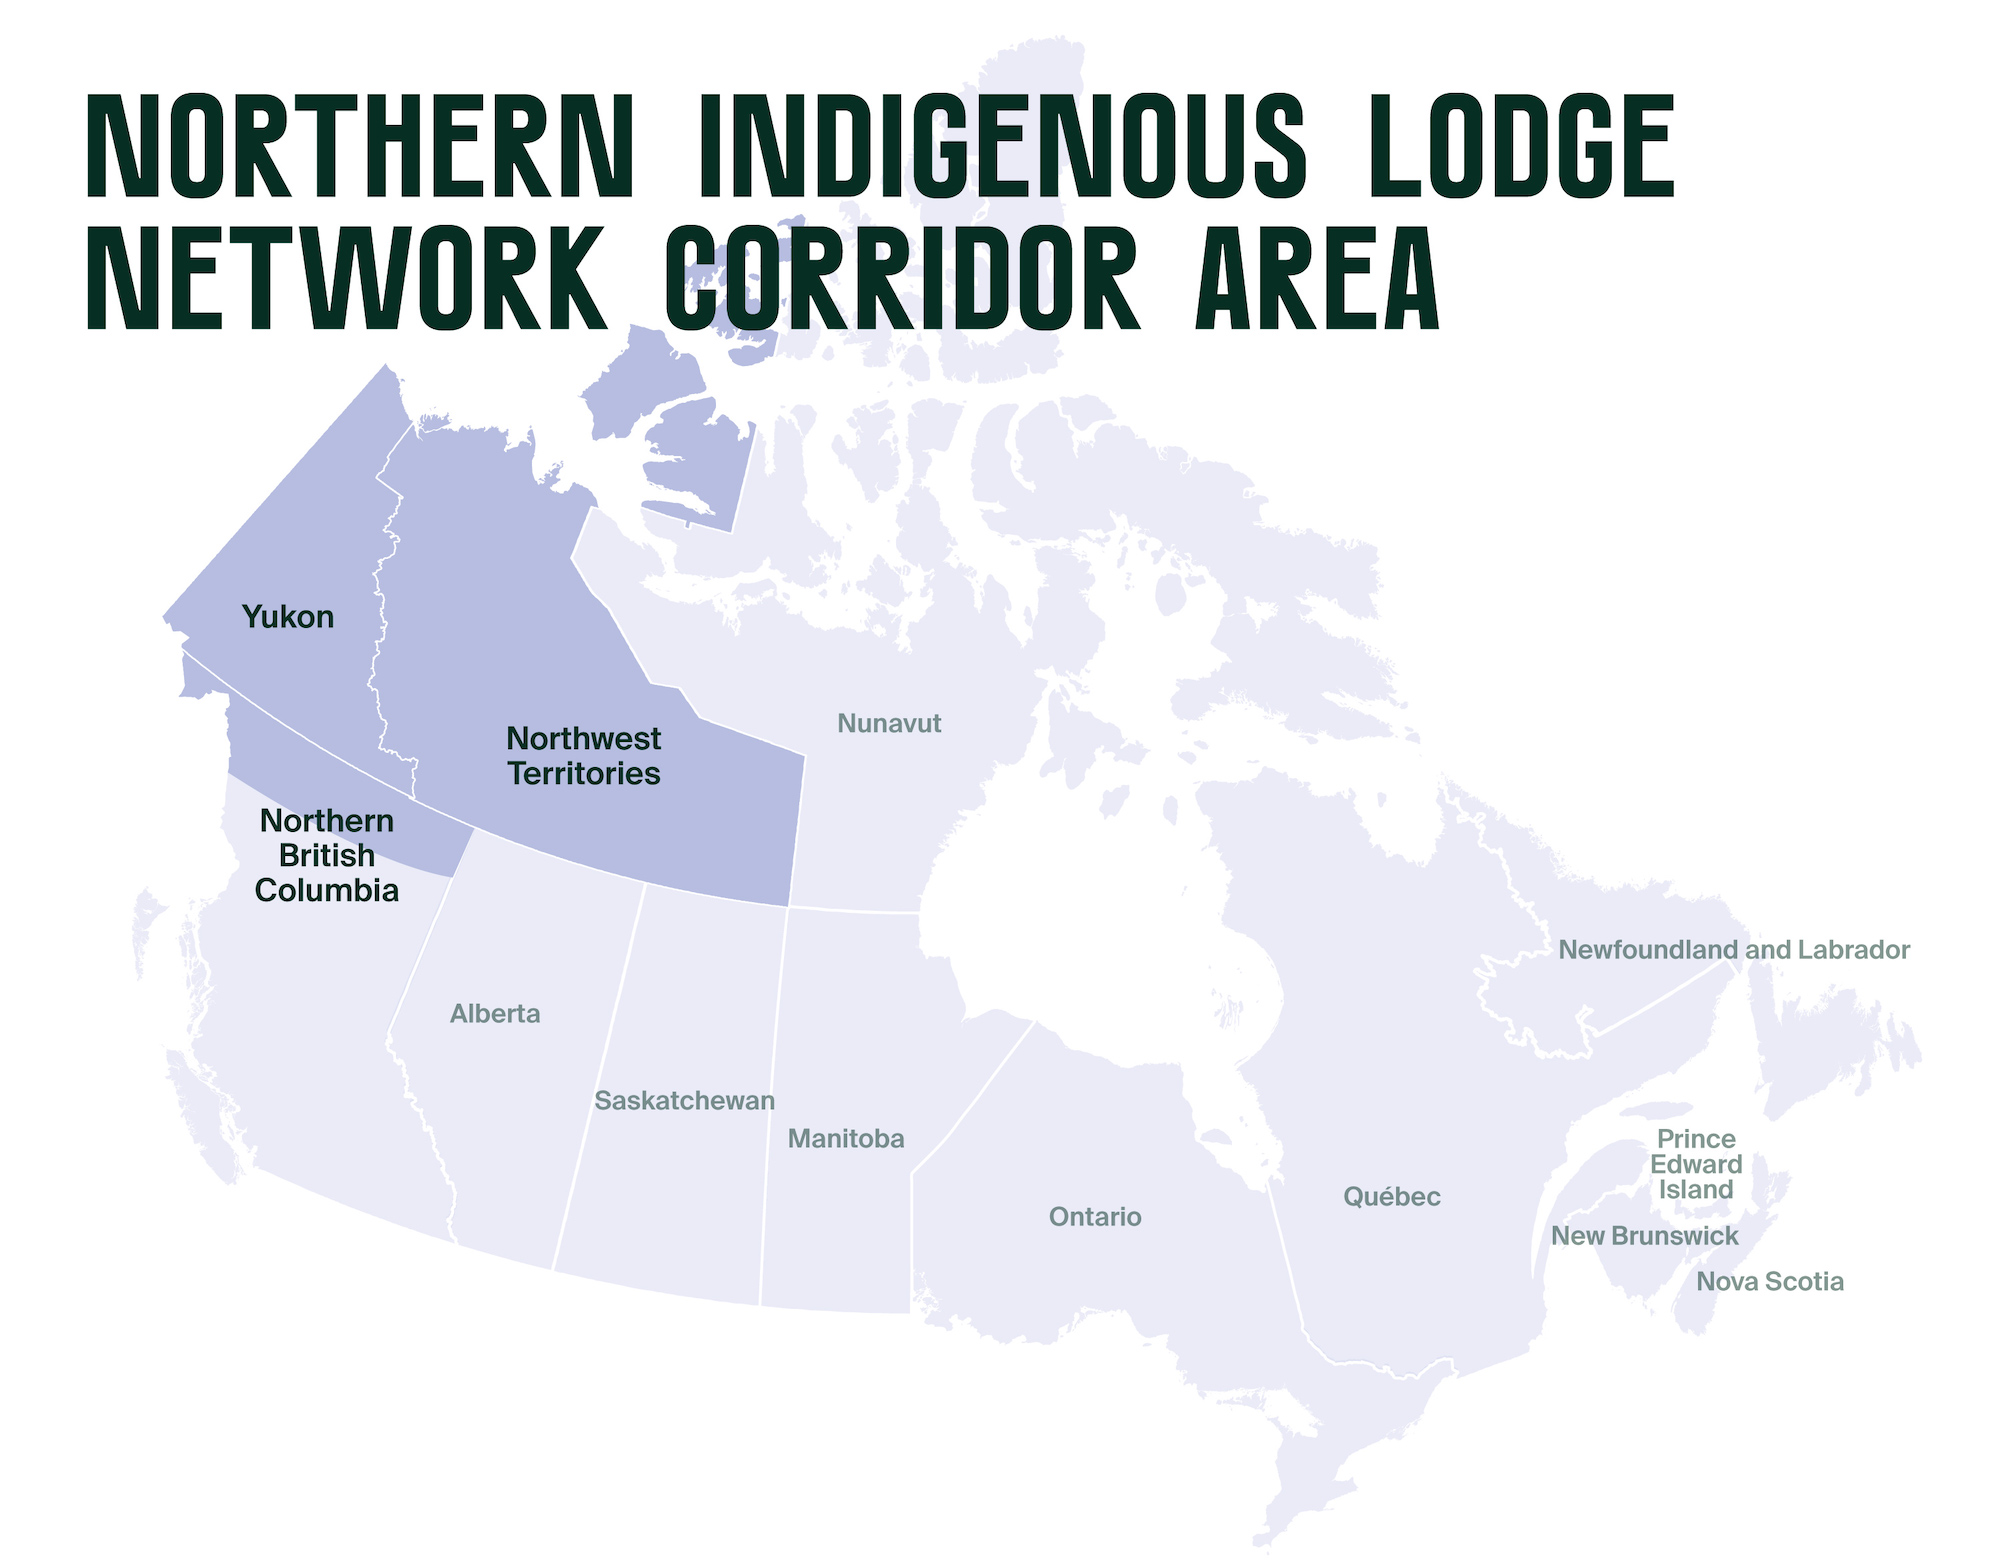 Northern Indigenous Lodge Network Corridor